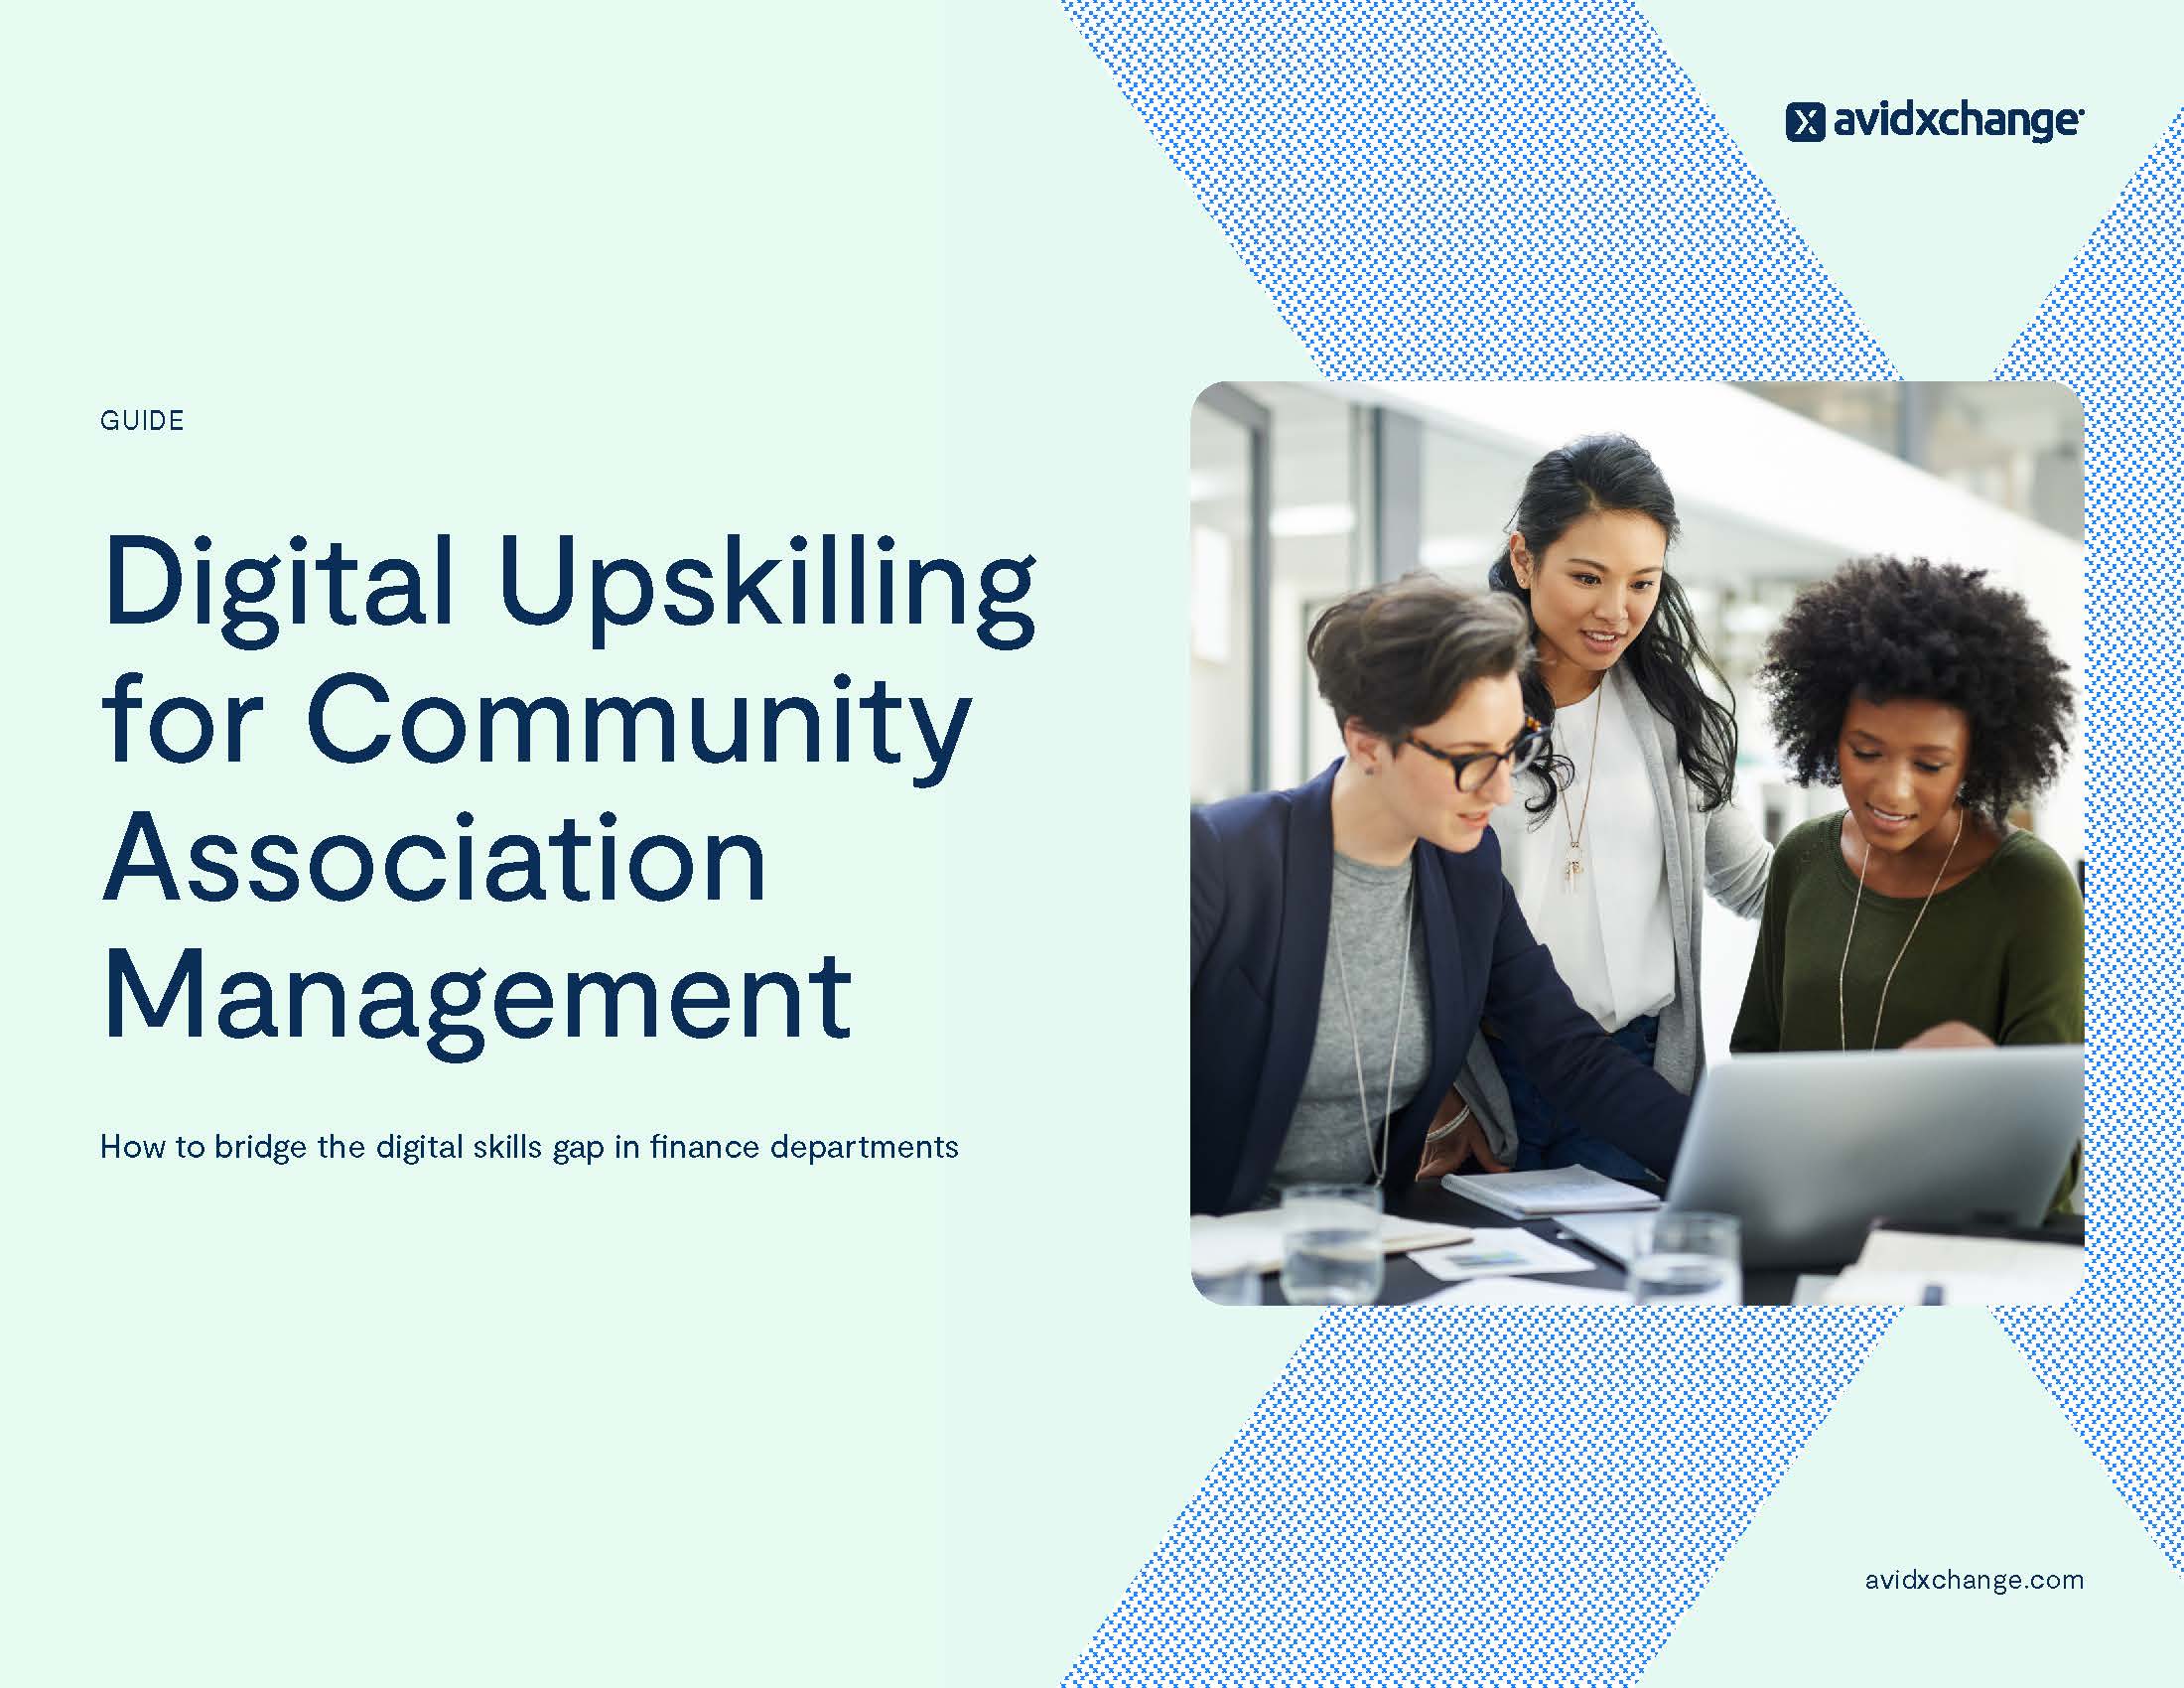 Digital Upskilling for Community Association Management Cover Image